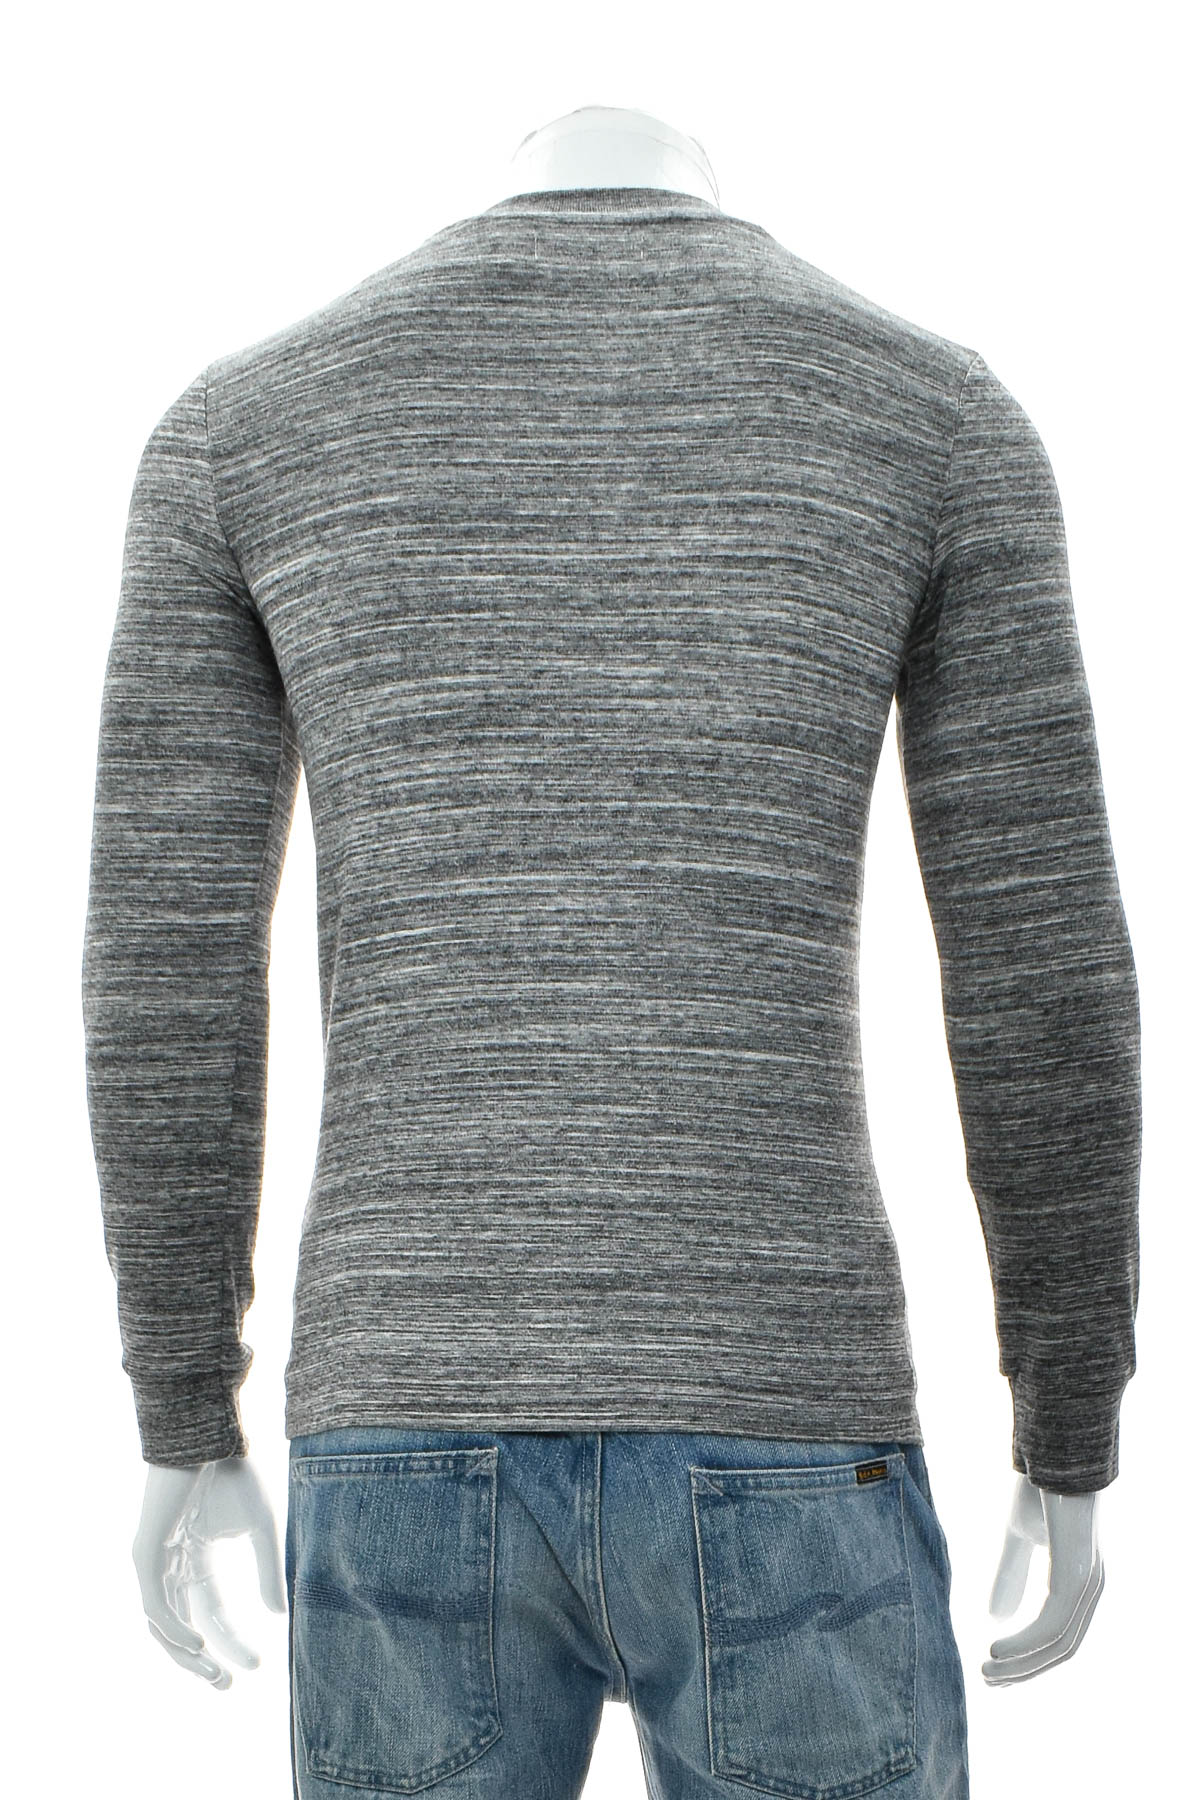 Men's sweater - PRIMARK - 1